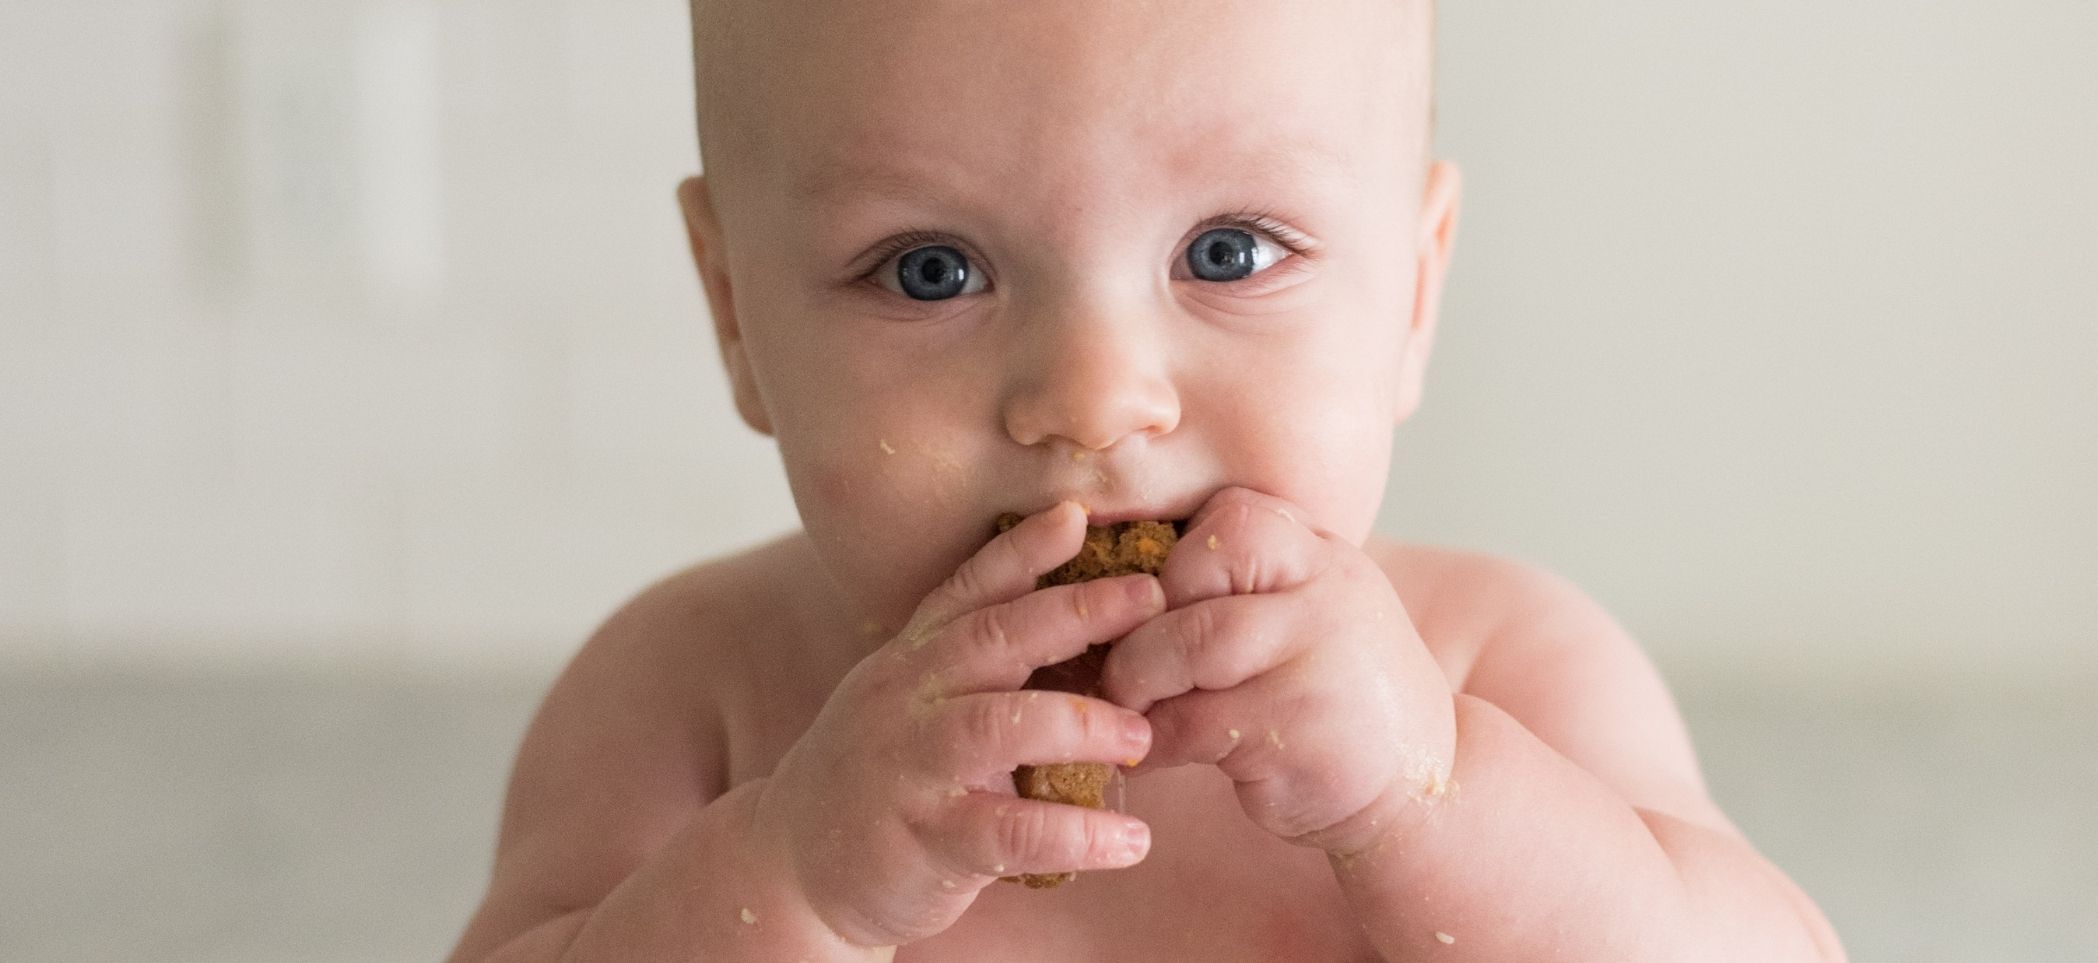 a baby eats food